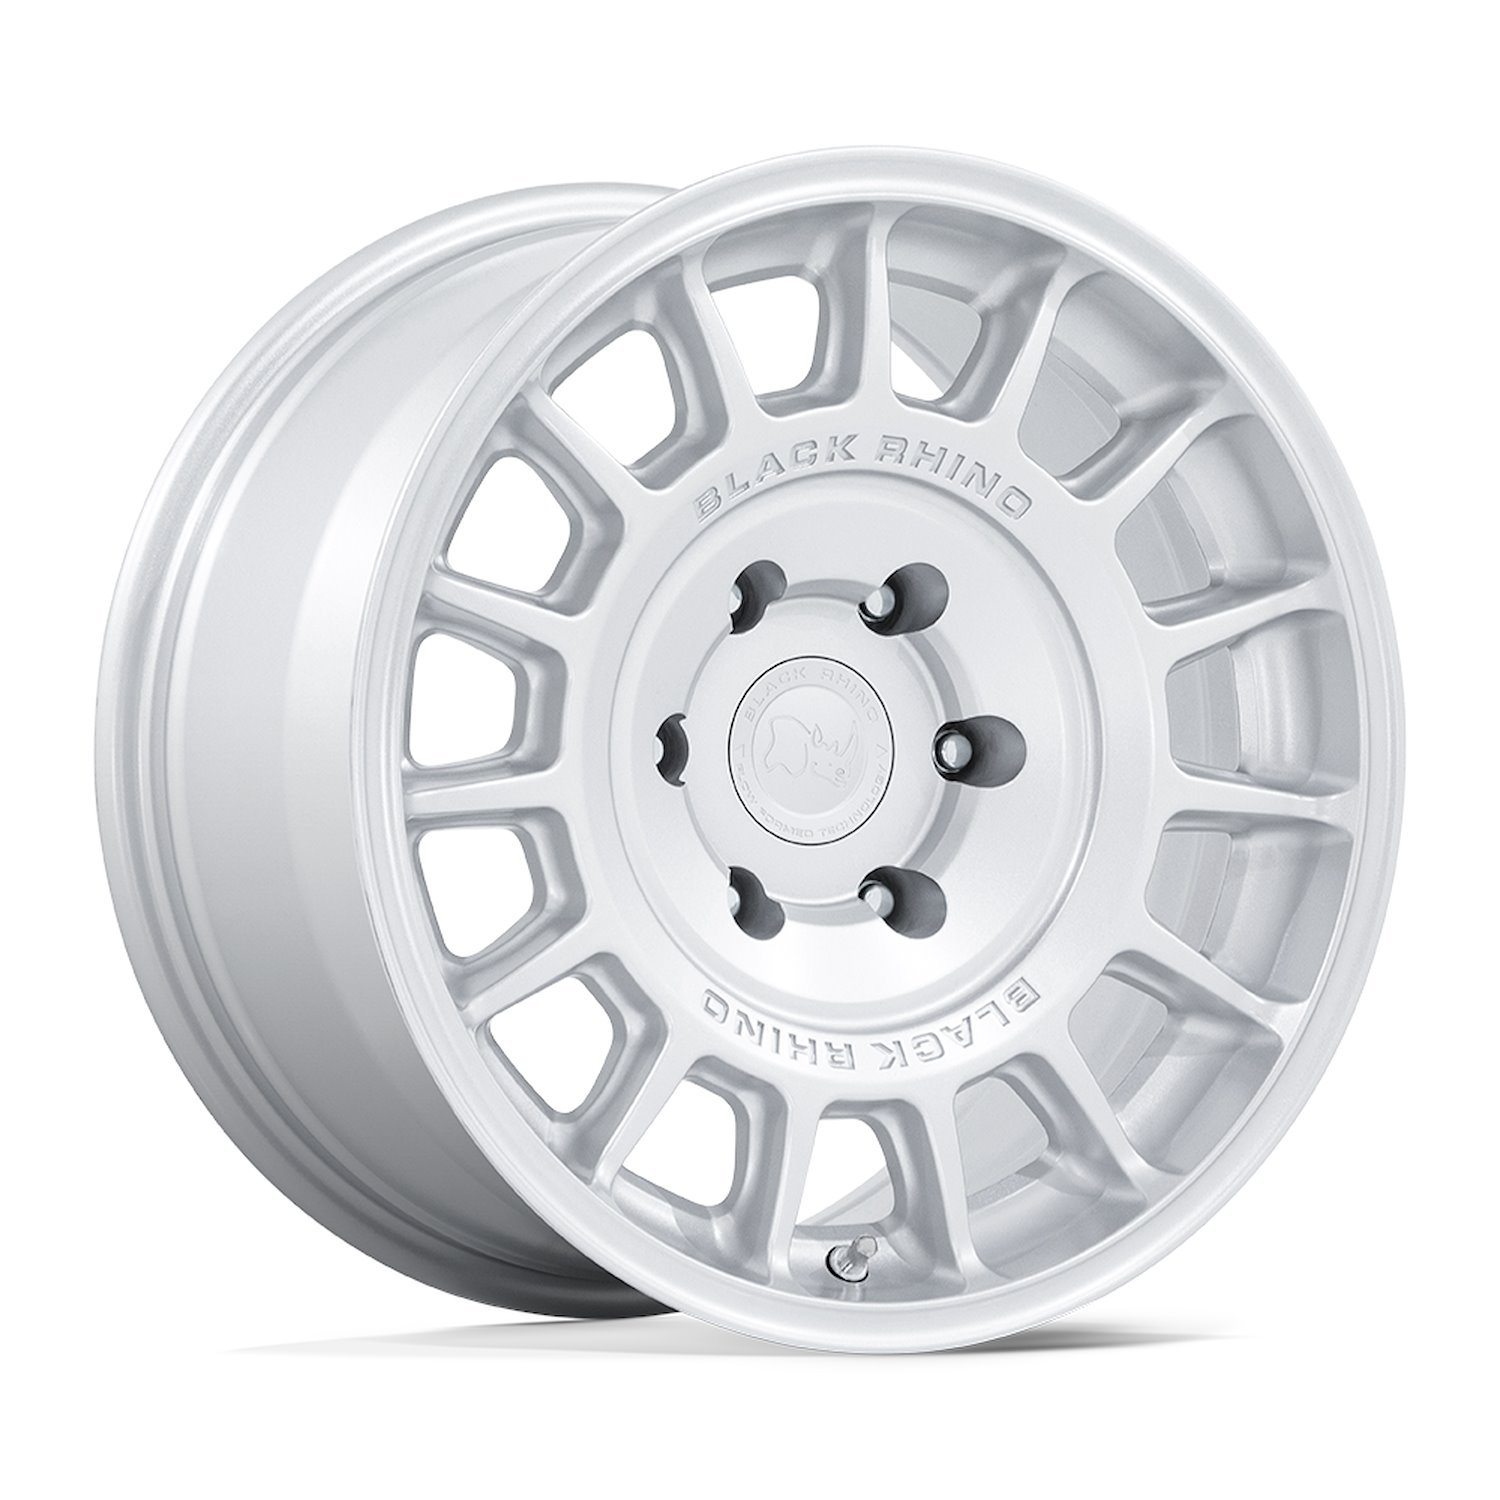 BR015SX17856800 BR015 VOLL Wheel [Size: 17" x 8.50"] Hyper Silver